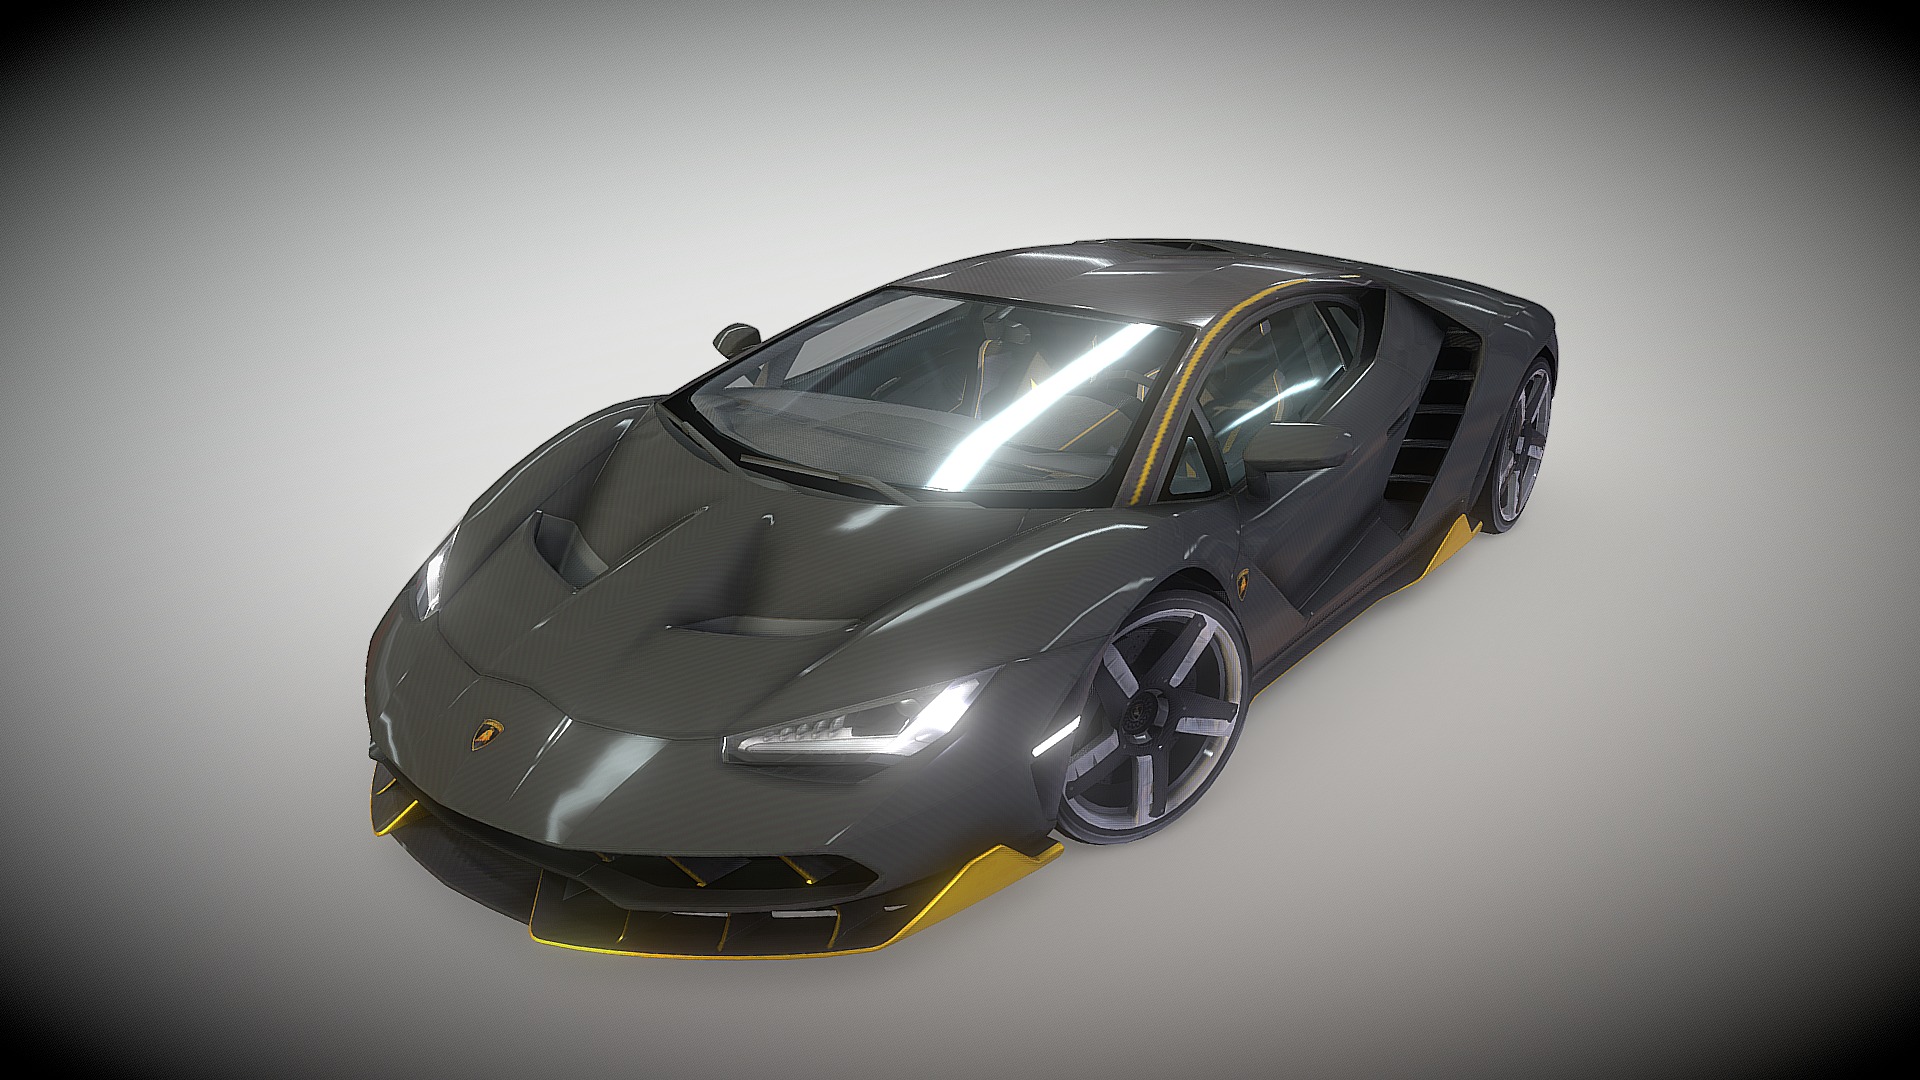 Roadster Edition: https://sketchfab.com/models/cd28247c4ae74ed0b9e3af18fa39d68d
Dont Ask for free downloads, it will never happen! - Lamborghini Centenario - 3D model by OGL (@GaryLim) 3d model